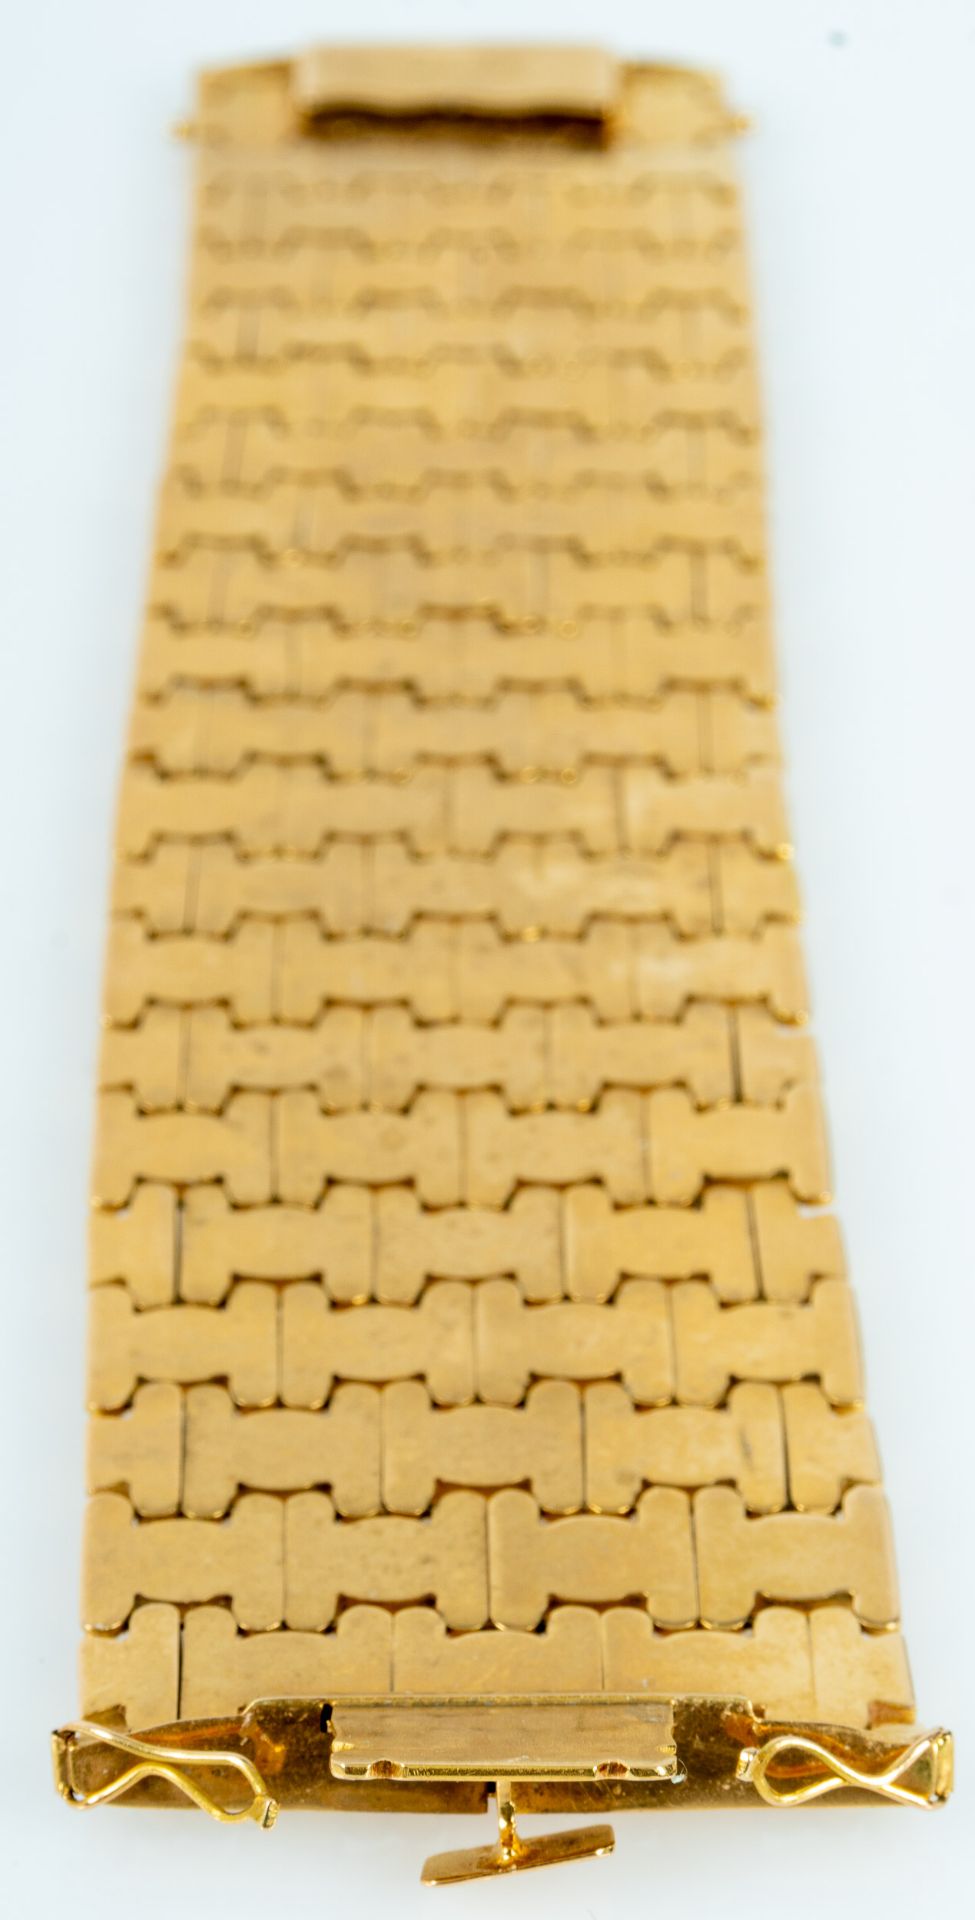 Breites Armband, sogen. "Teppich" - Armband aus 750er Gelbgold, gestempelt: "262 VI IALE 750"; ca. - Image 10 of 11